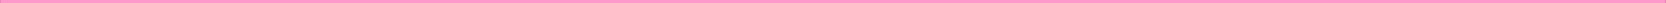 pinkline33